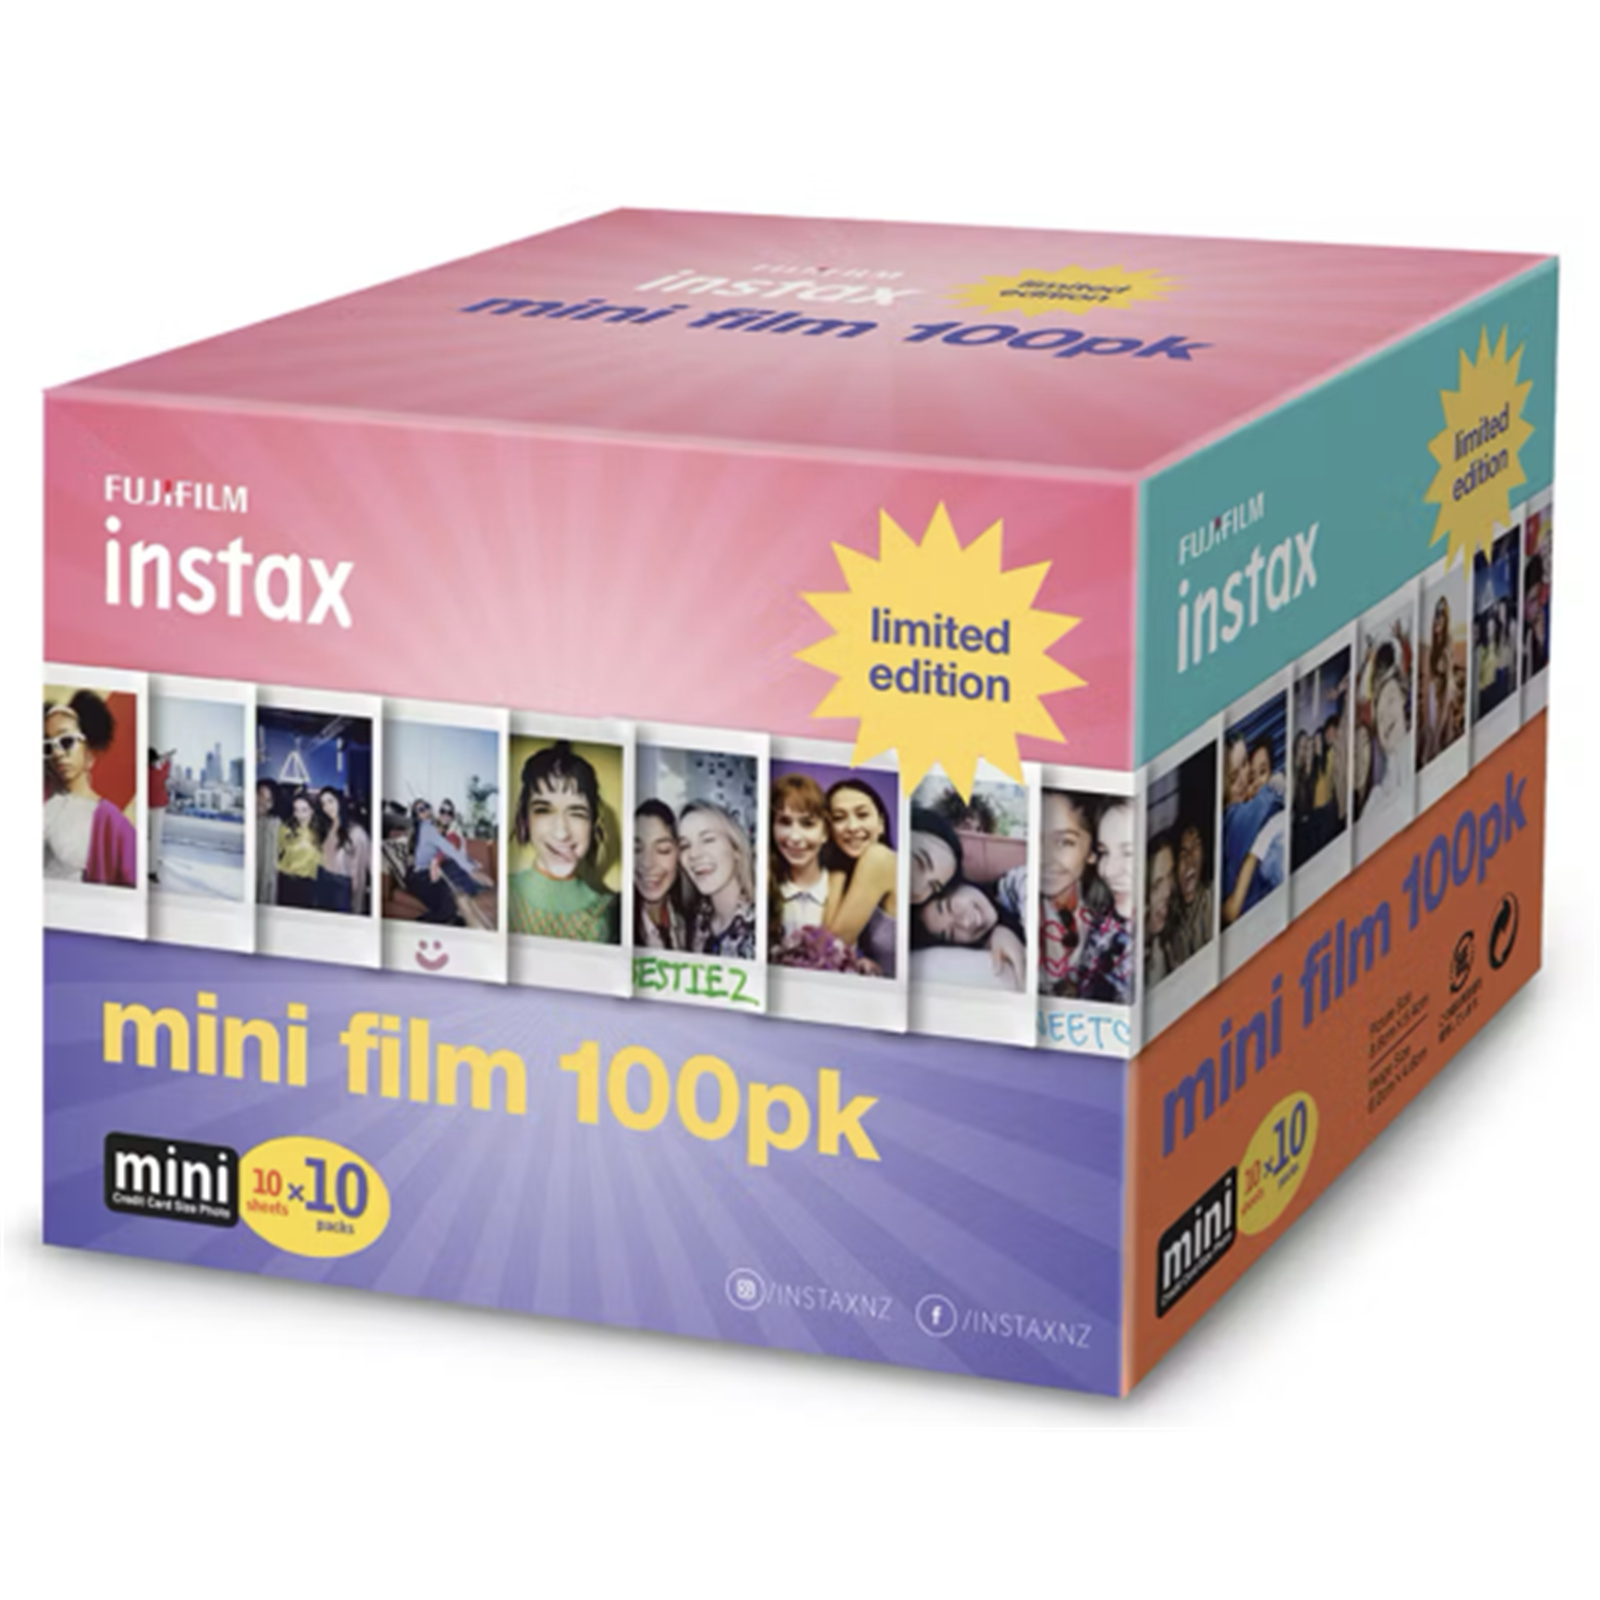 Jeg er stolt træk uld over øjnene Republikanske parti Buy the FujiFilm Instax Mini Film 100 Pack Limited Edition ( 9420038705677  ) online - PBTech.com/pacific